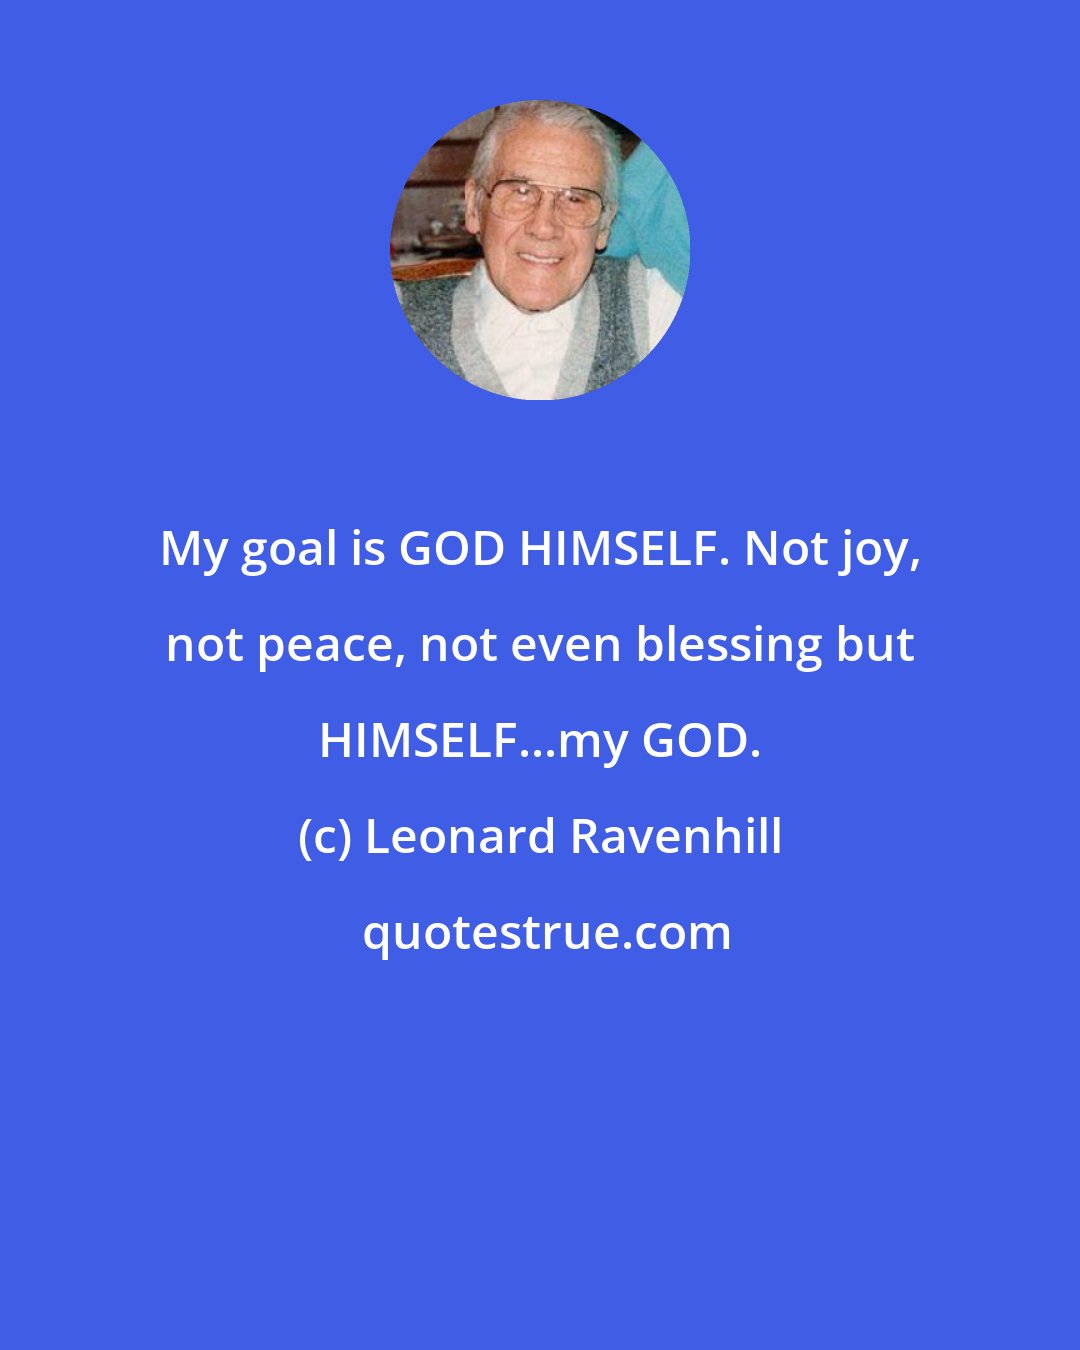 Leonard Ravenhill: My goal is GOD HIMSELF. Not joy, not peace, not even blessing but HIMSELF...my GOD.